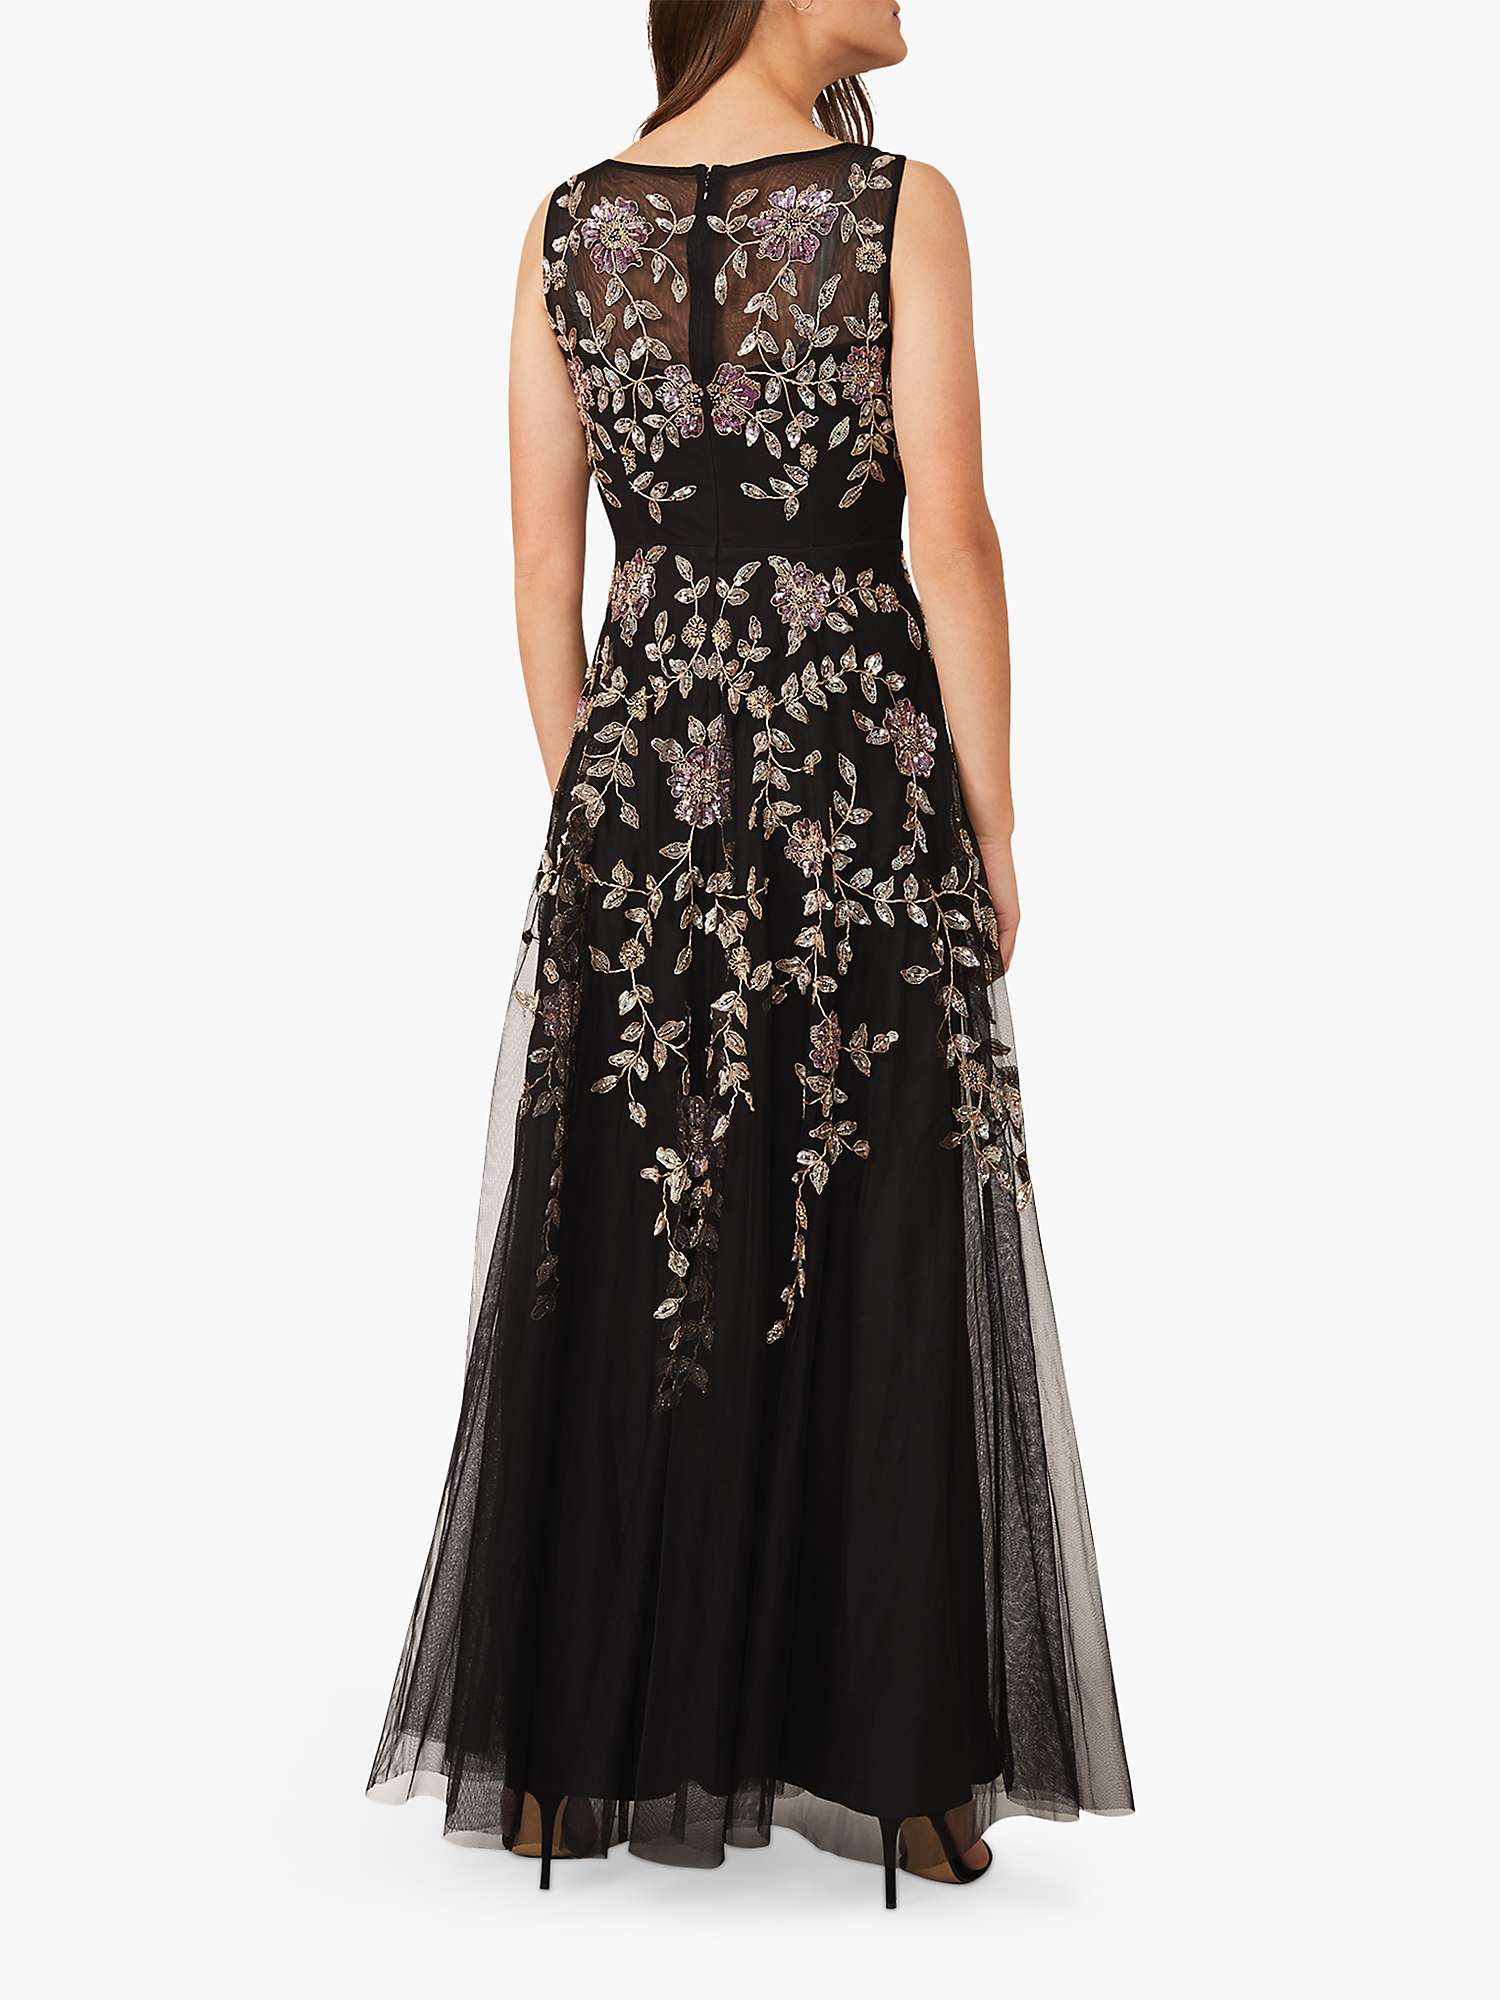 Buy Phase Eight Collection 8 Jacqueline Floral Embellished Dress, Black/Multi Online at johnlewis.com